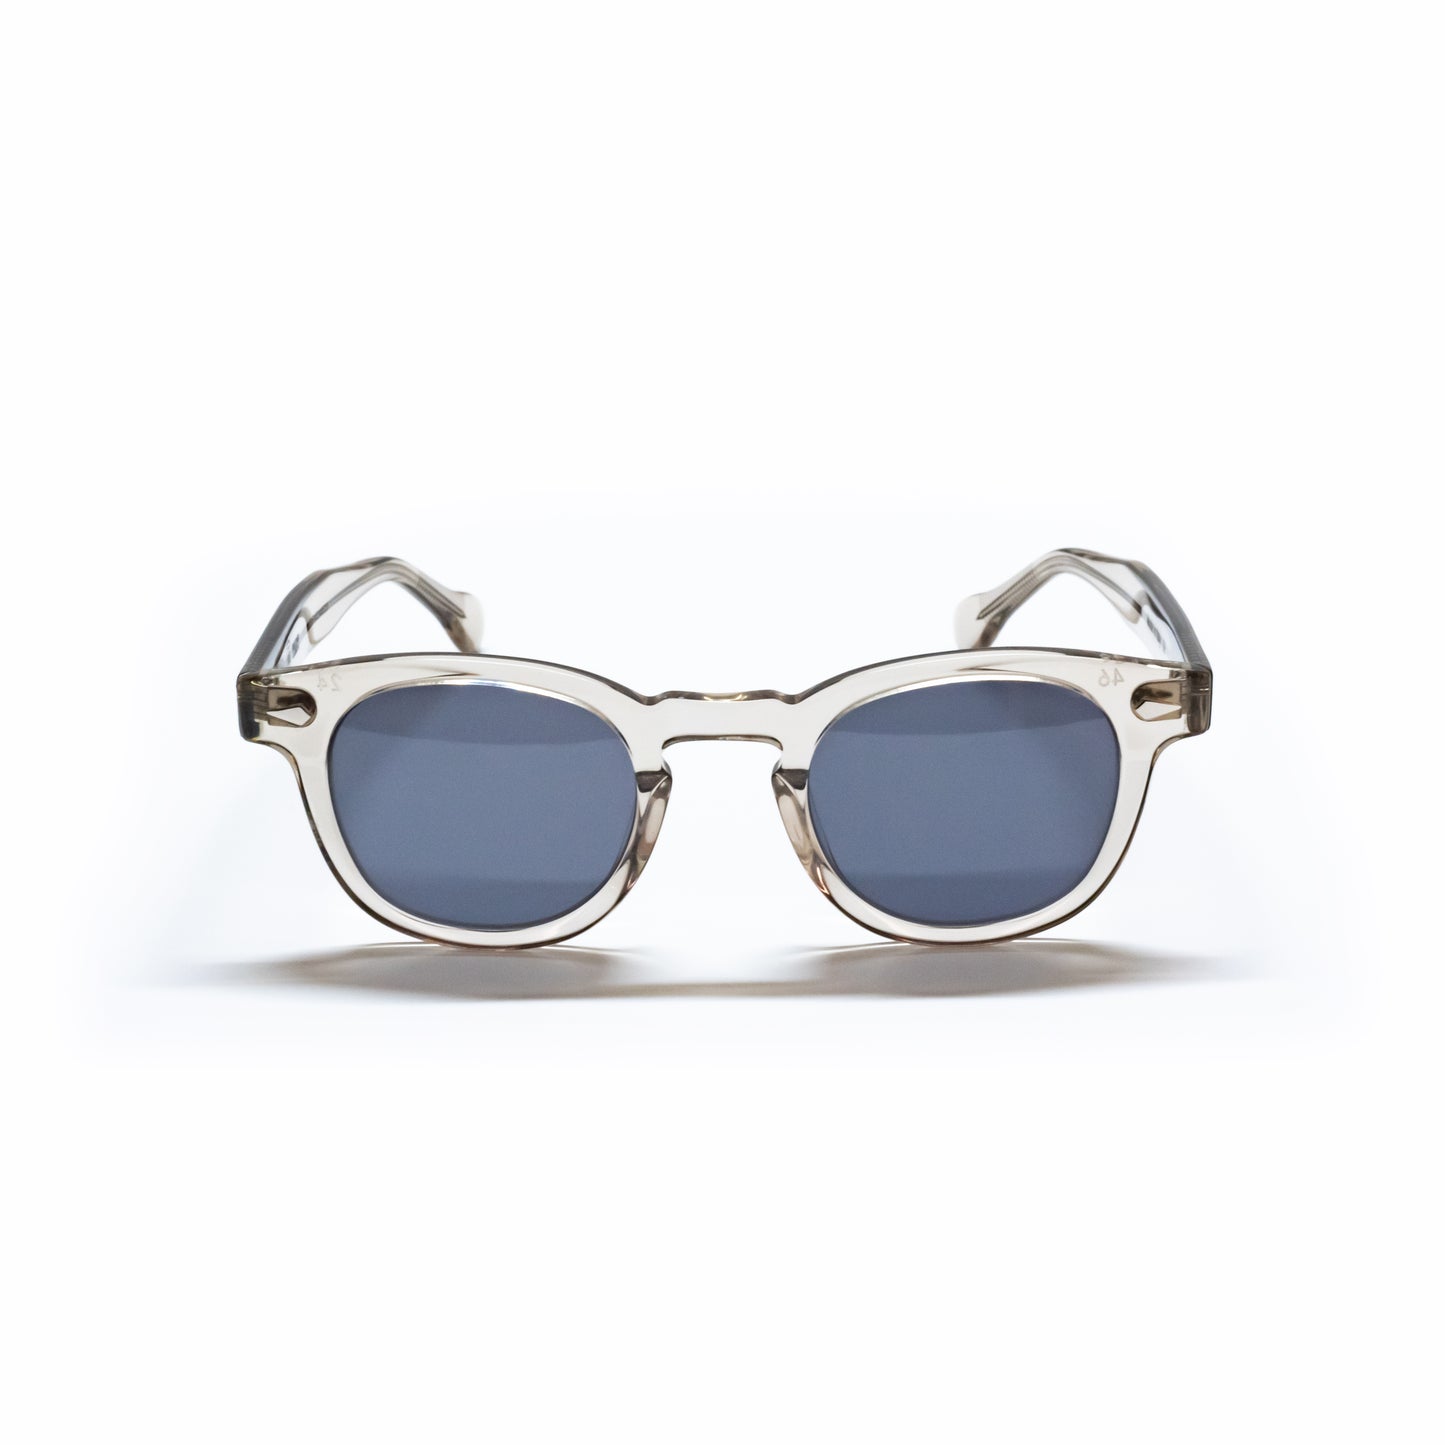 Arnel® Sunglasses | Italy |  Standard Bridge Fit